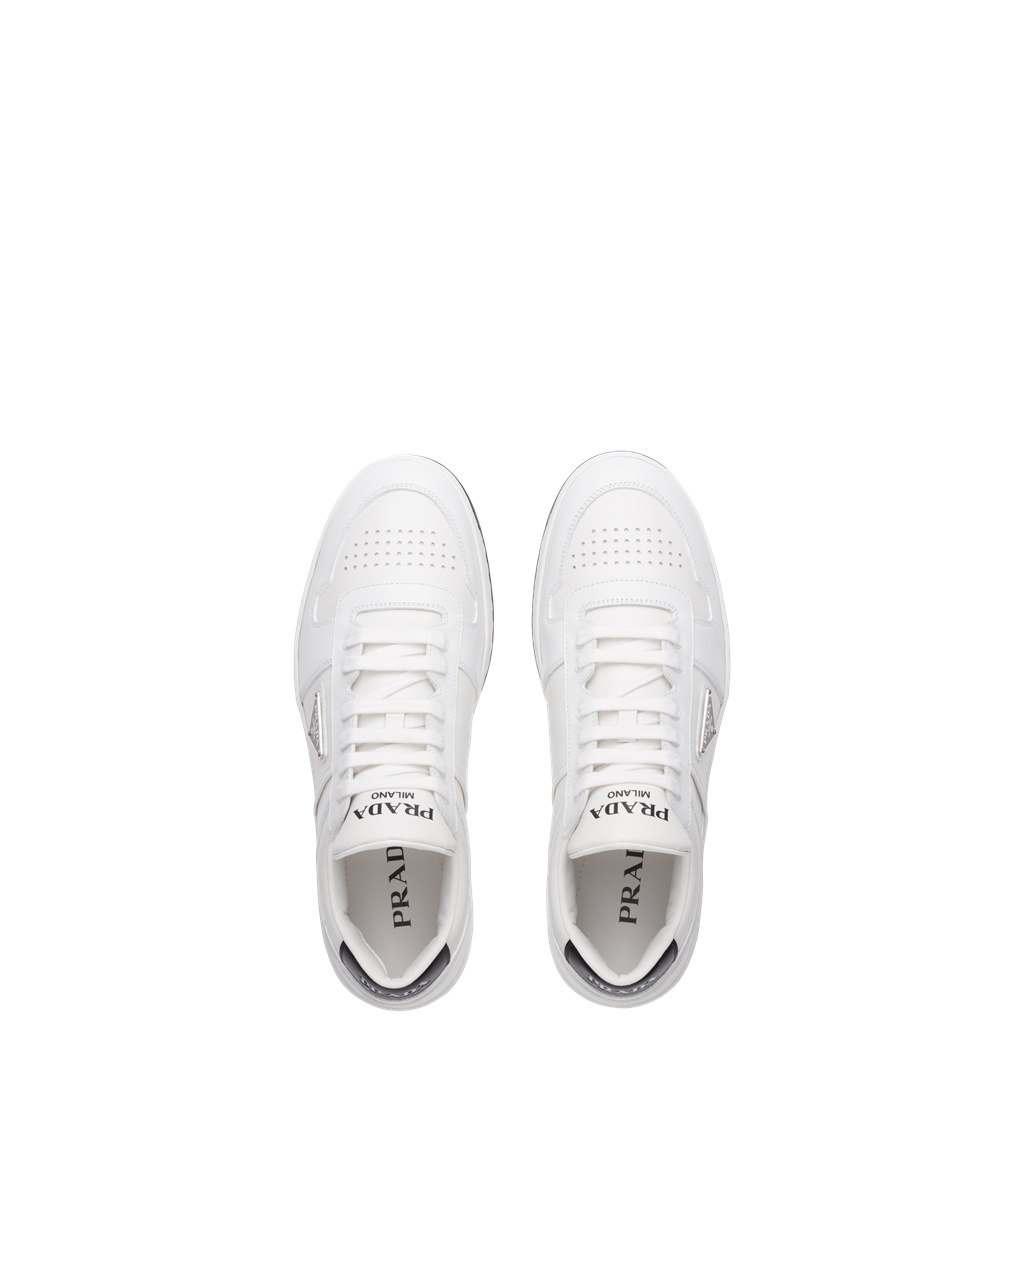 Prada Downtown Leather Sneakers White / Black | 6714MBCTU